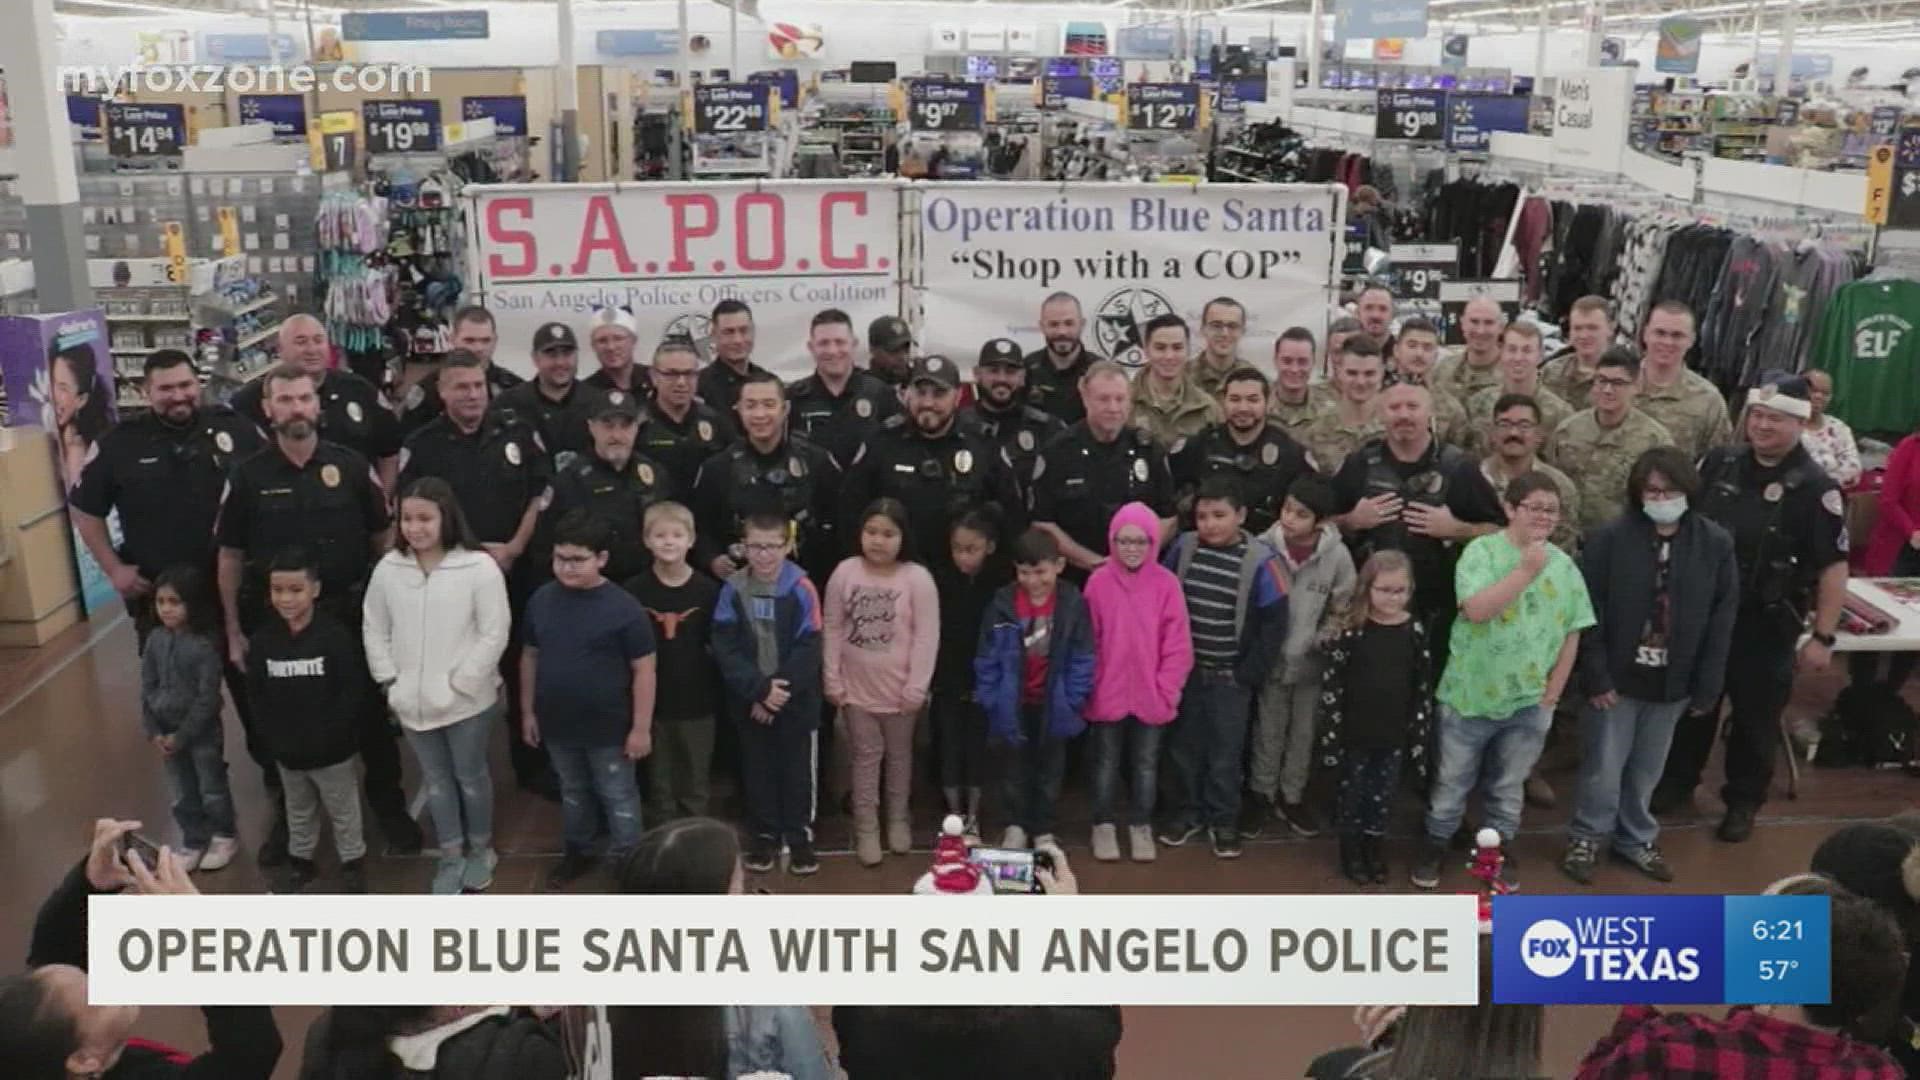 Operation Blue Santa 2021 was held at the Walmart North Saturday, Dec. 18.